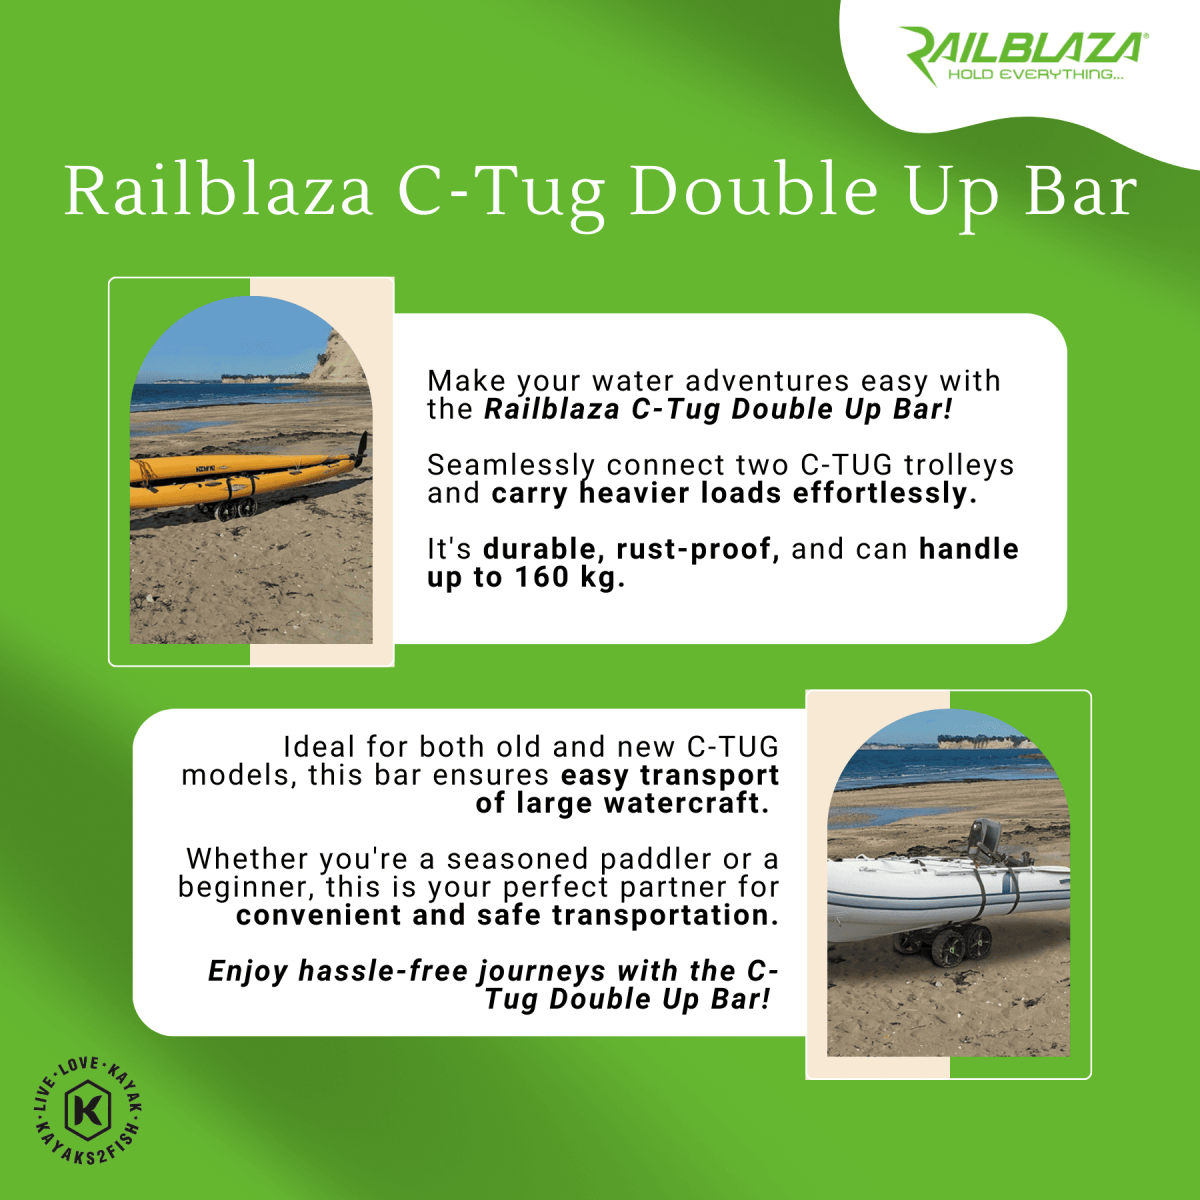 Railblaza C-Tug Double Up Bar